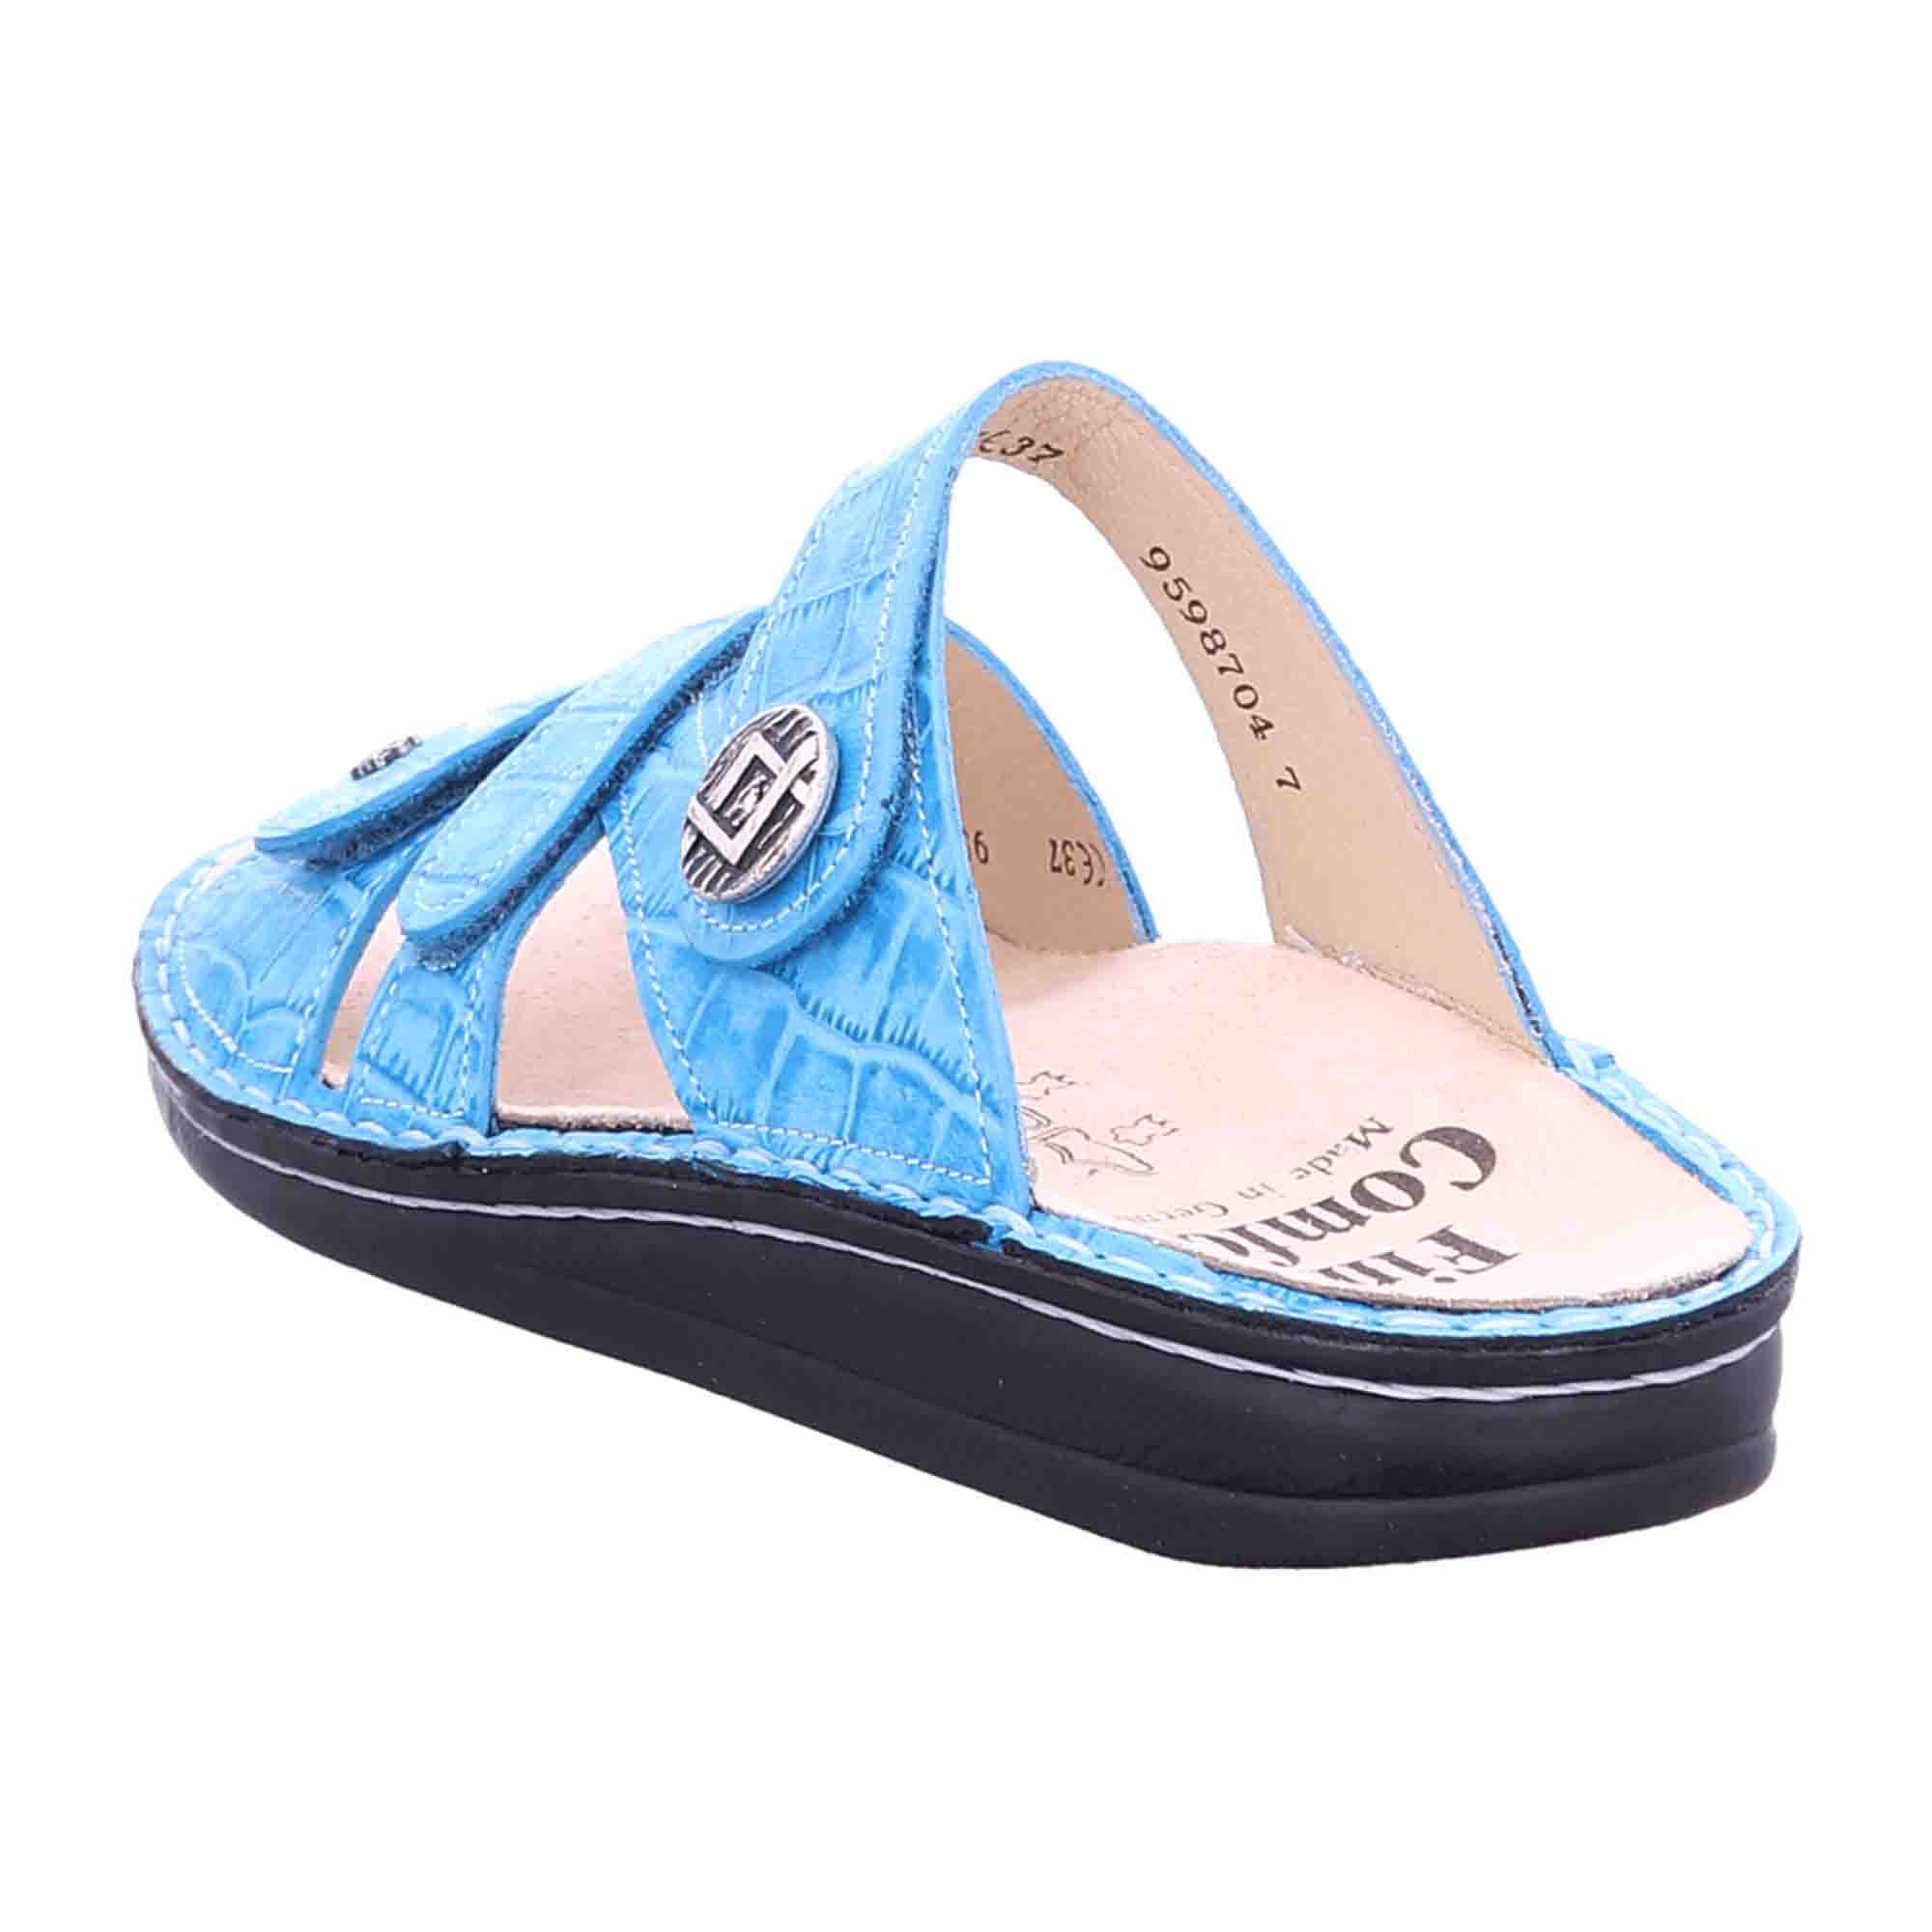 Finn Comfort Women's Comfortable Slip-On Sandals, Stylish Blue